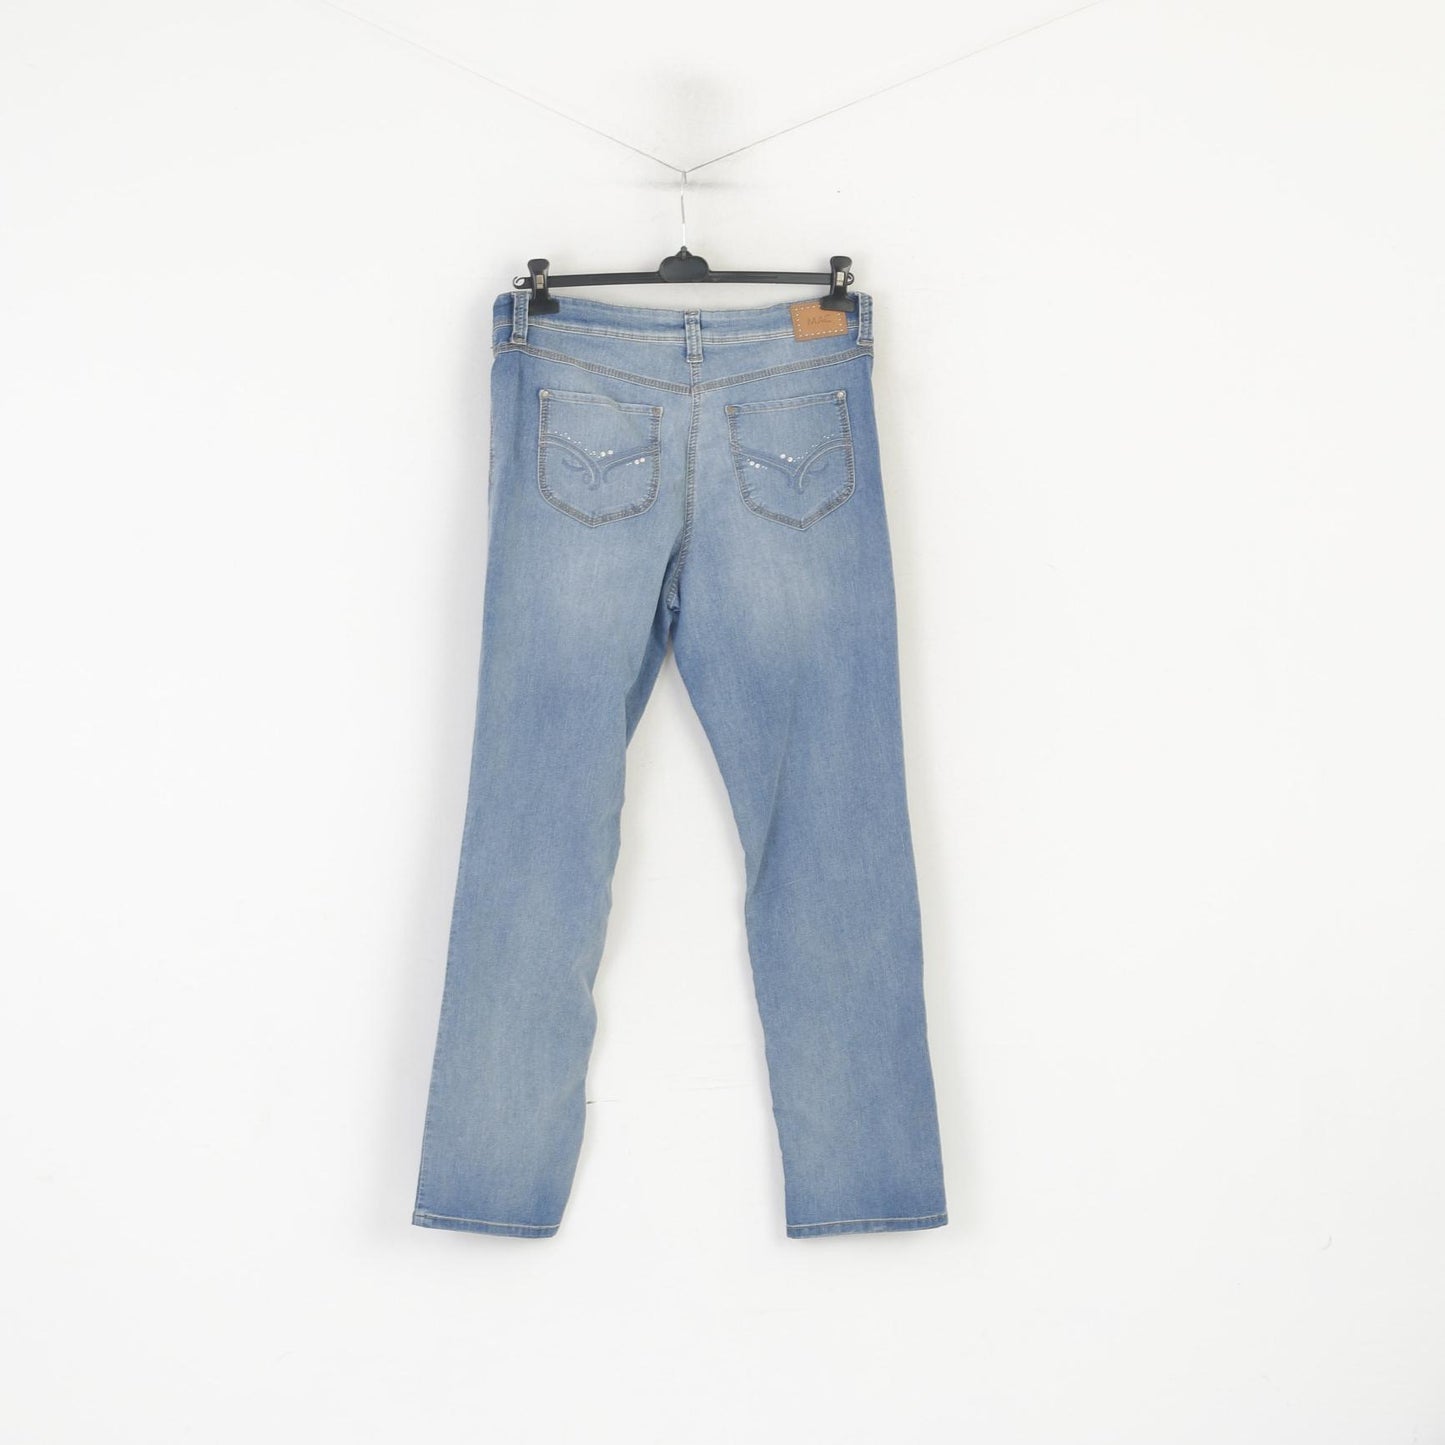 MAC Jeans Women 32 Jeans Trousers Blue Cotton Straight Leg High Waist